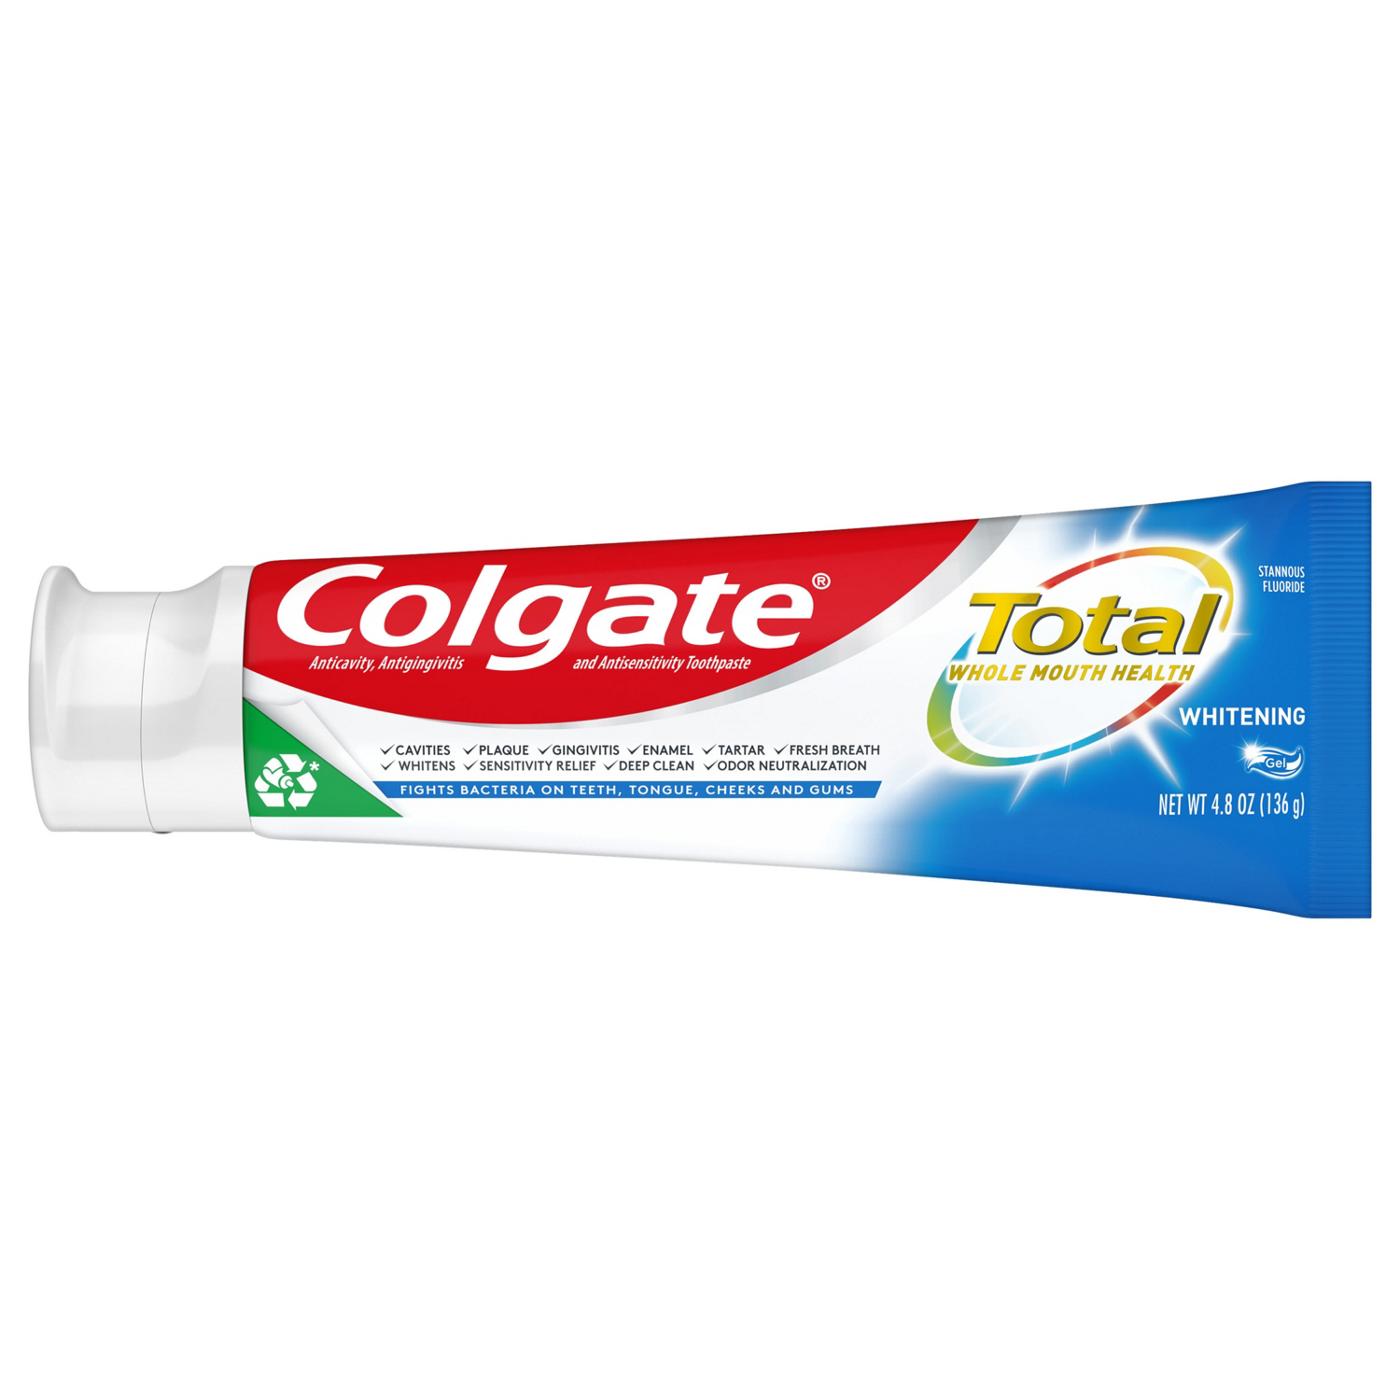 Colgate Total Whitening Gel Toothpaste; image 5 of 12